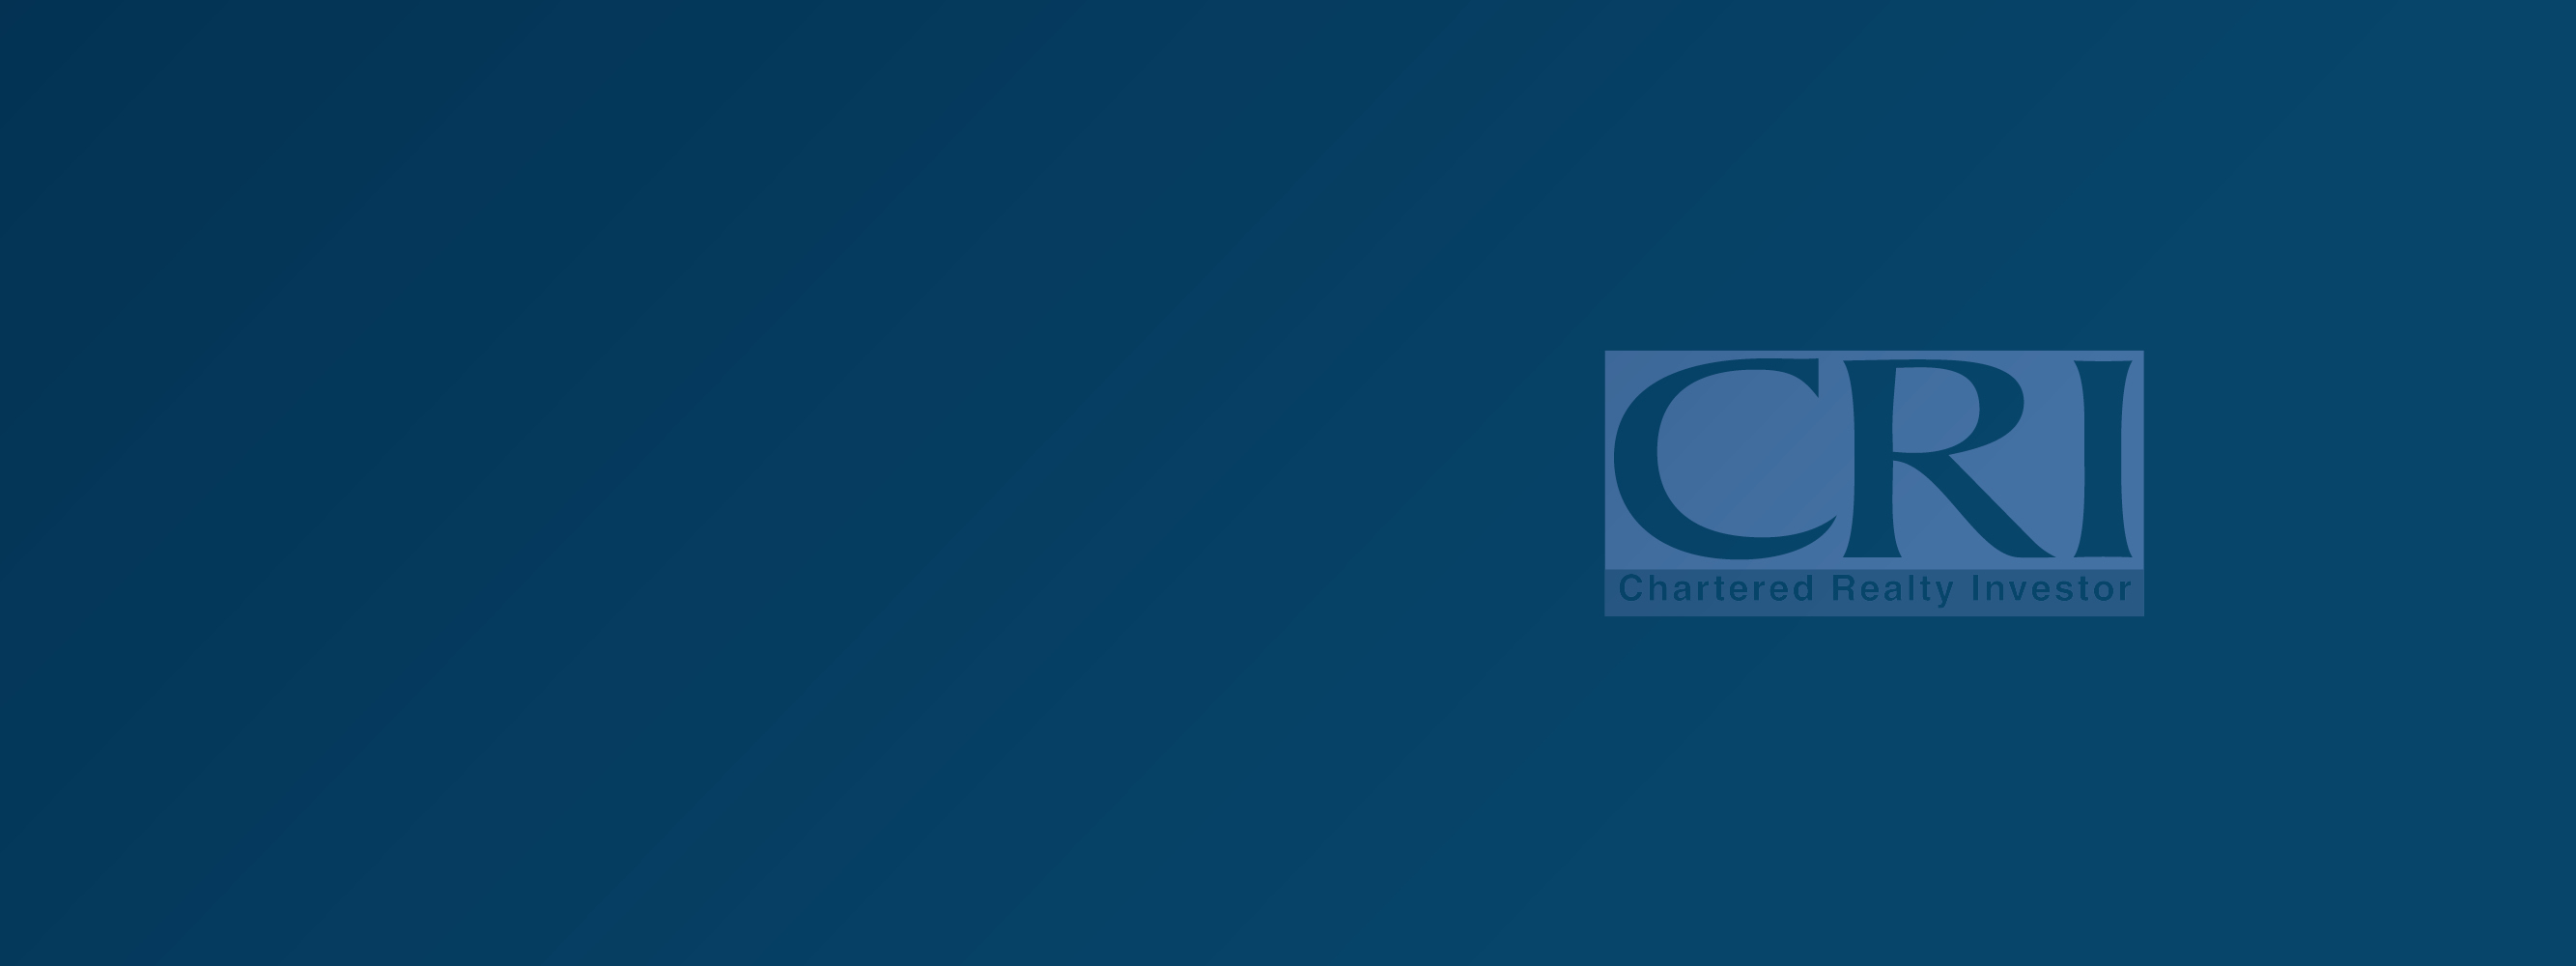 Education banner - image of CRI logo